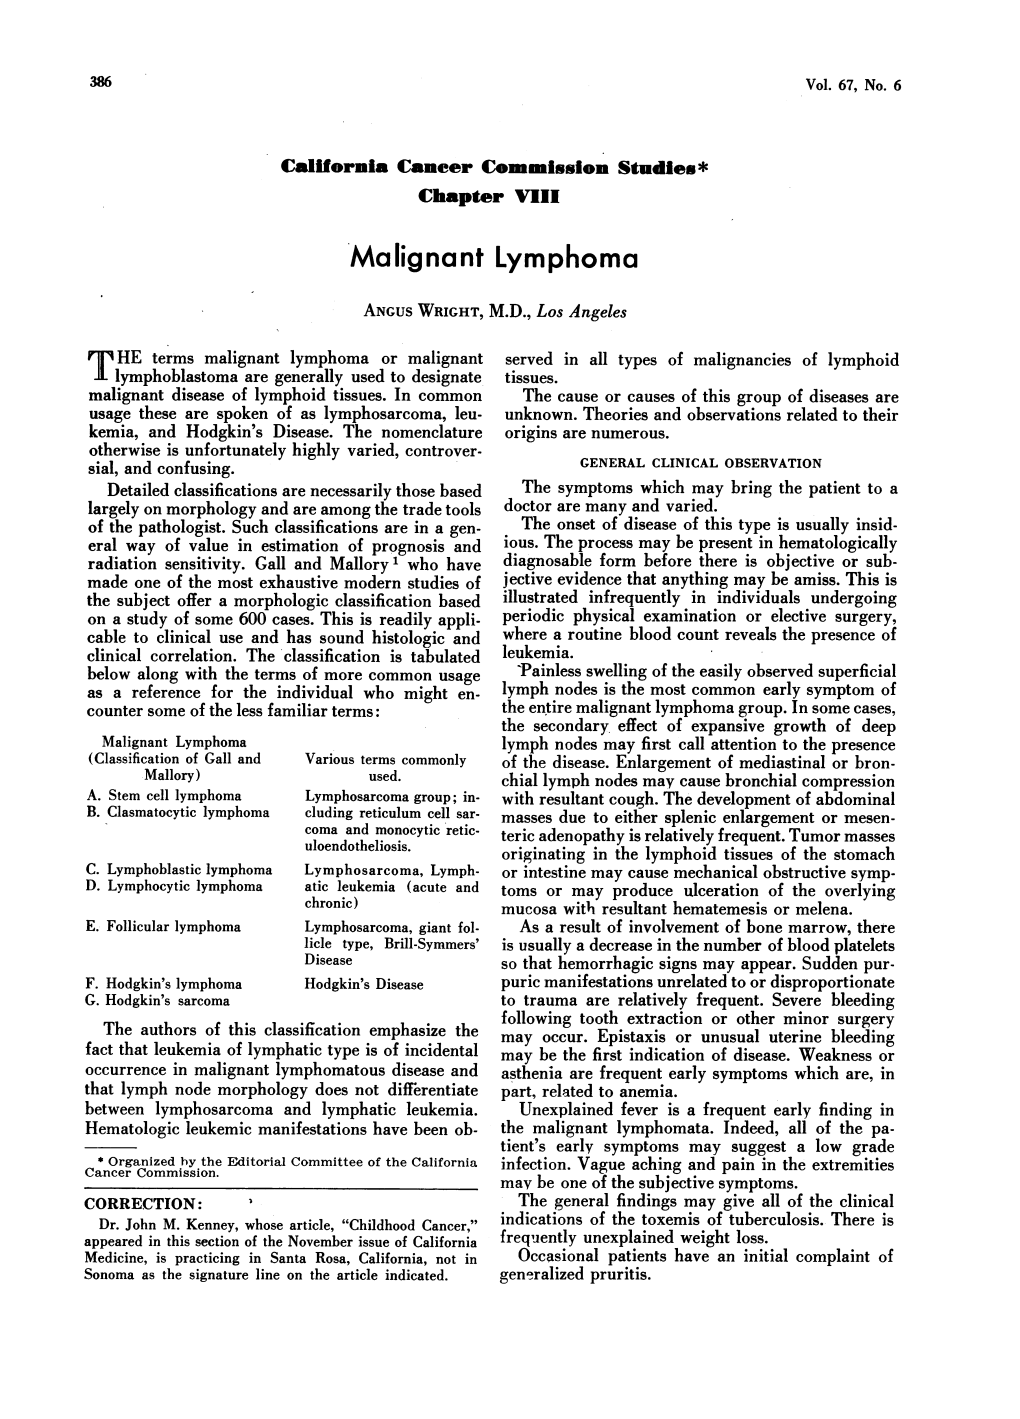 'Malignant Lymphoma